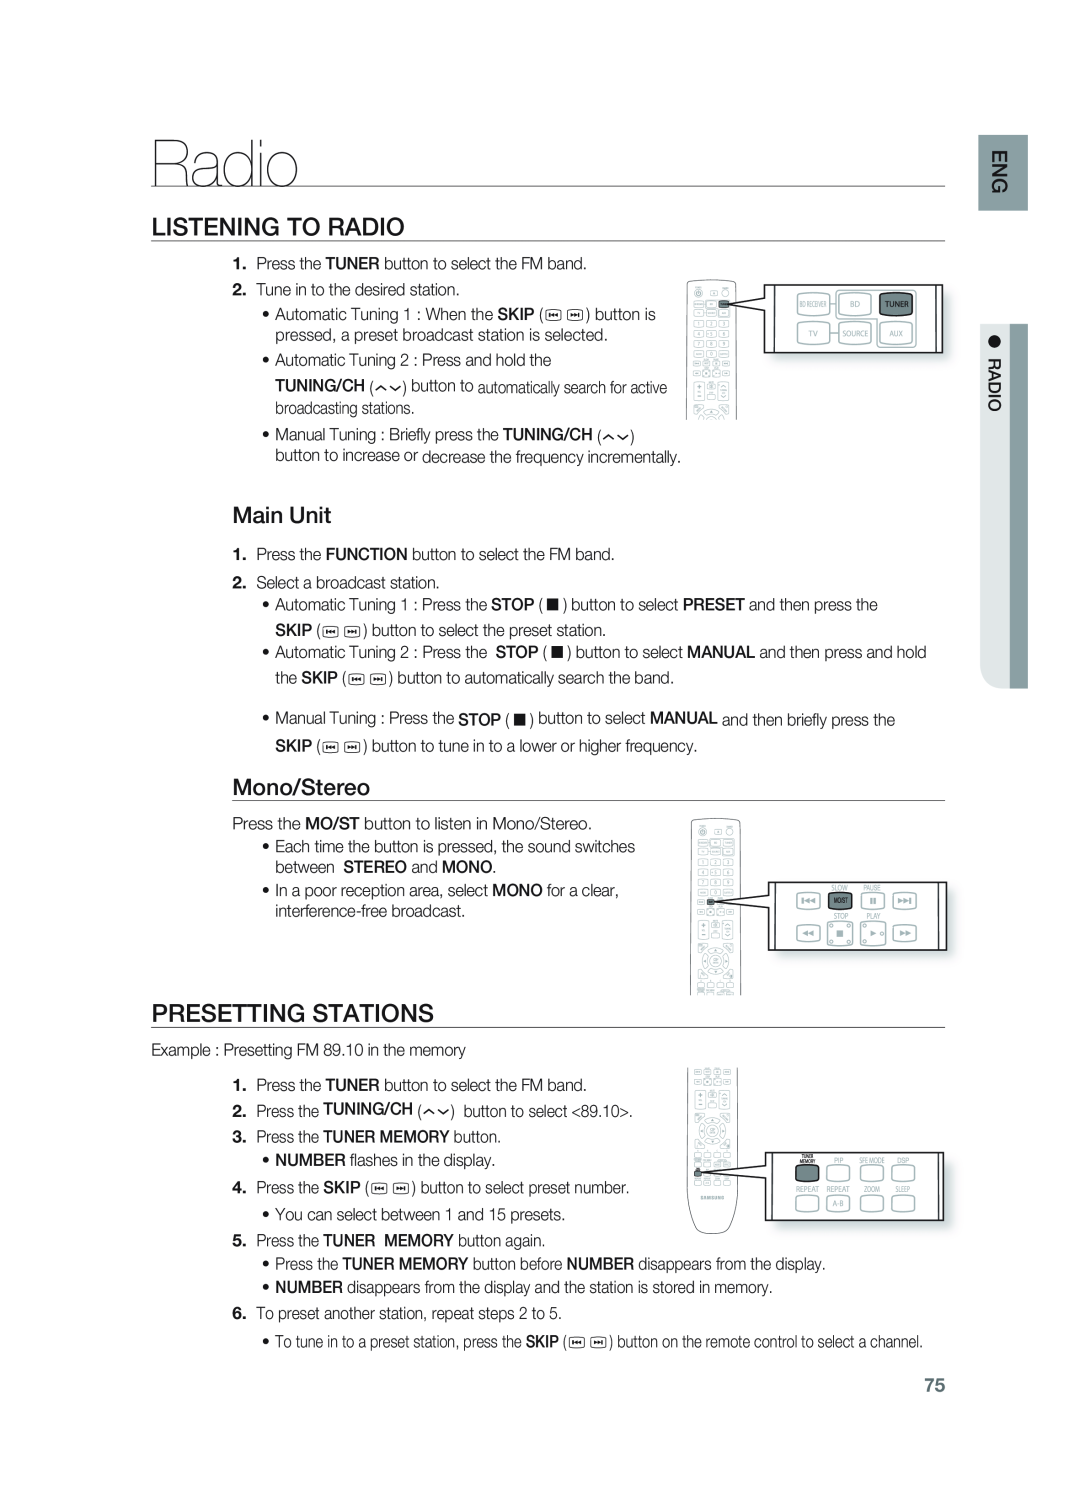 Samsung HT-BD1252, HT-BD1255 user manual Listening To Radio, Presetting Stations, Main Unit, Mono/Stereo 